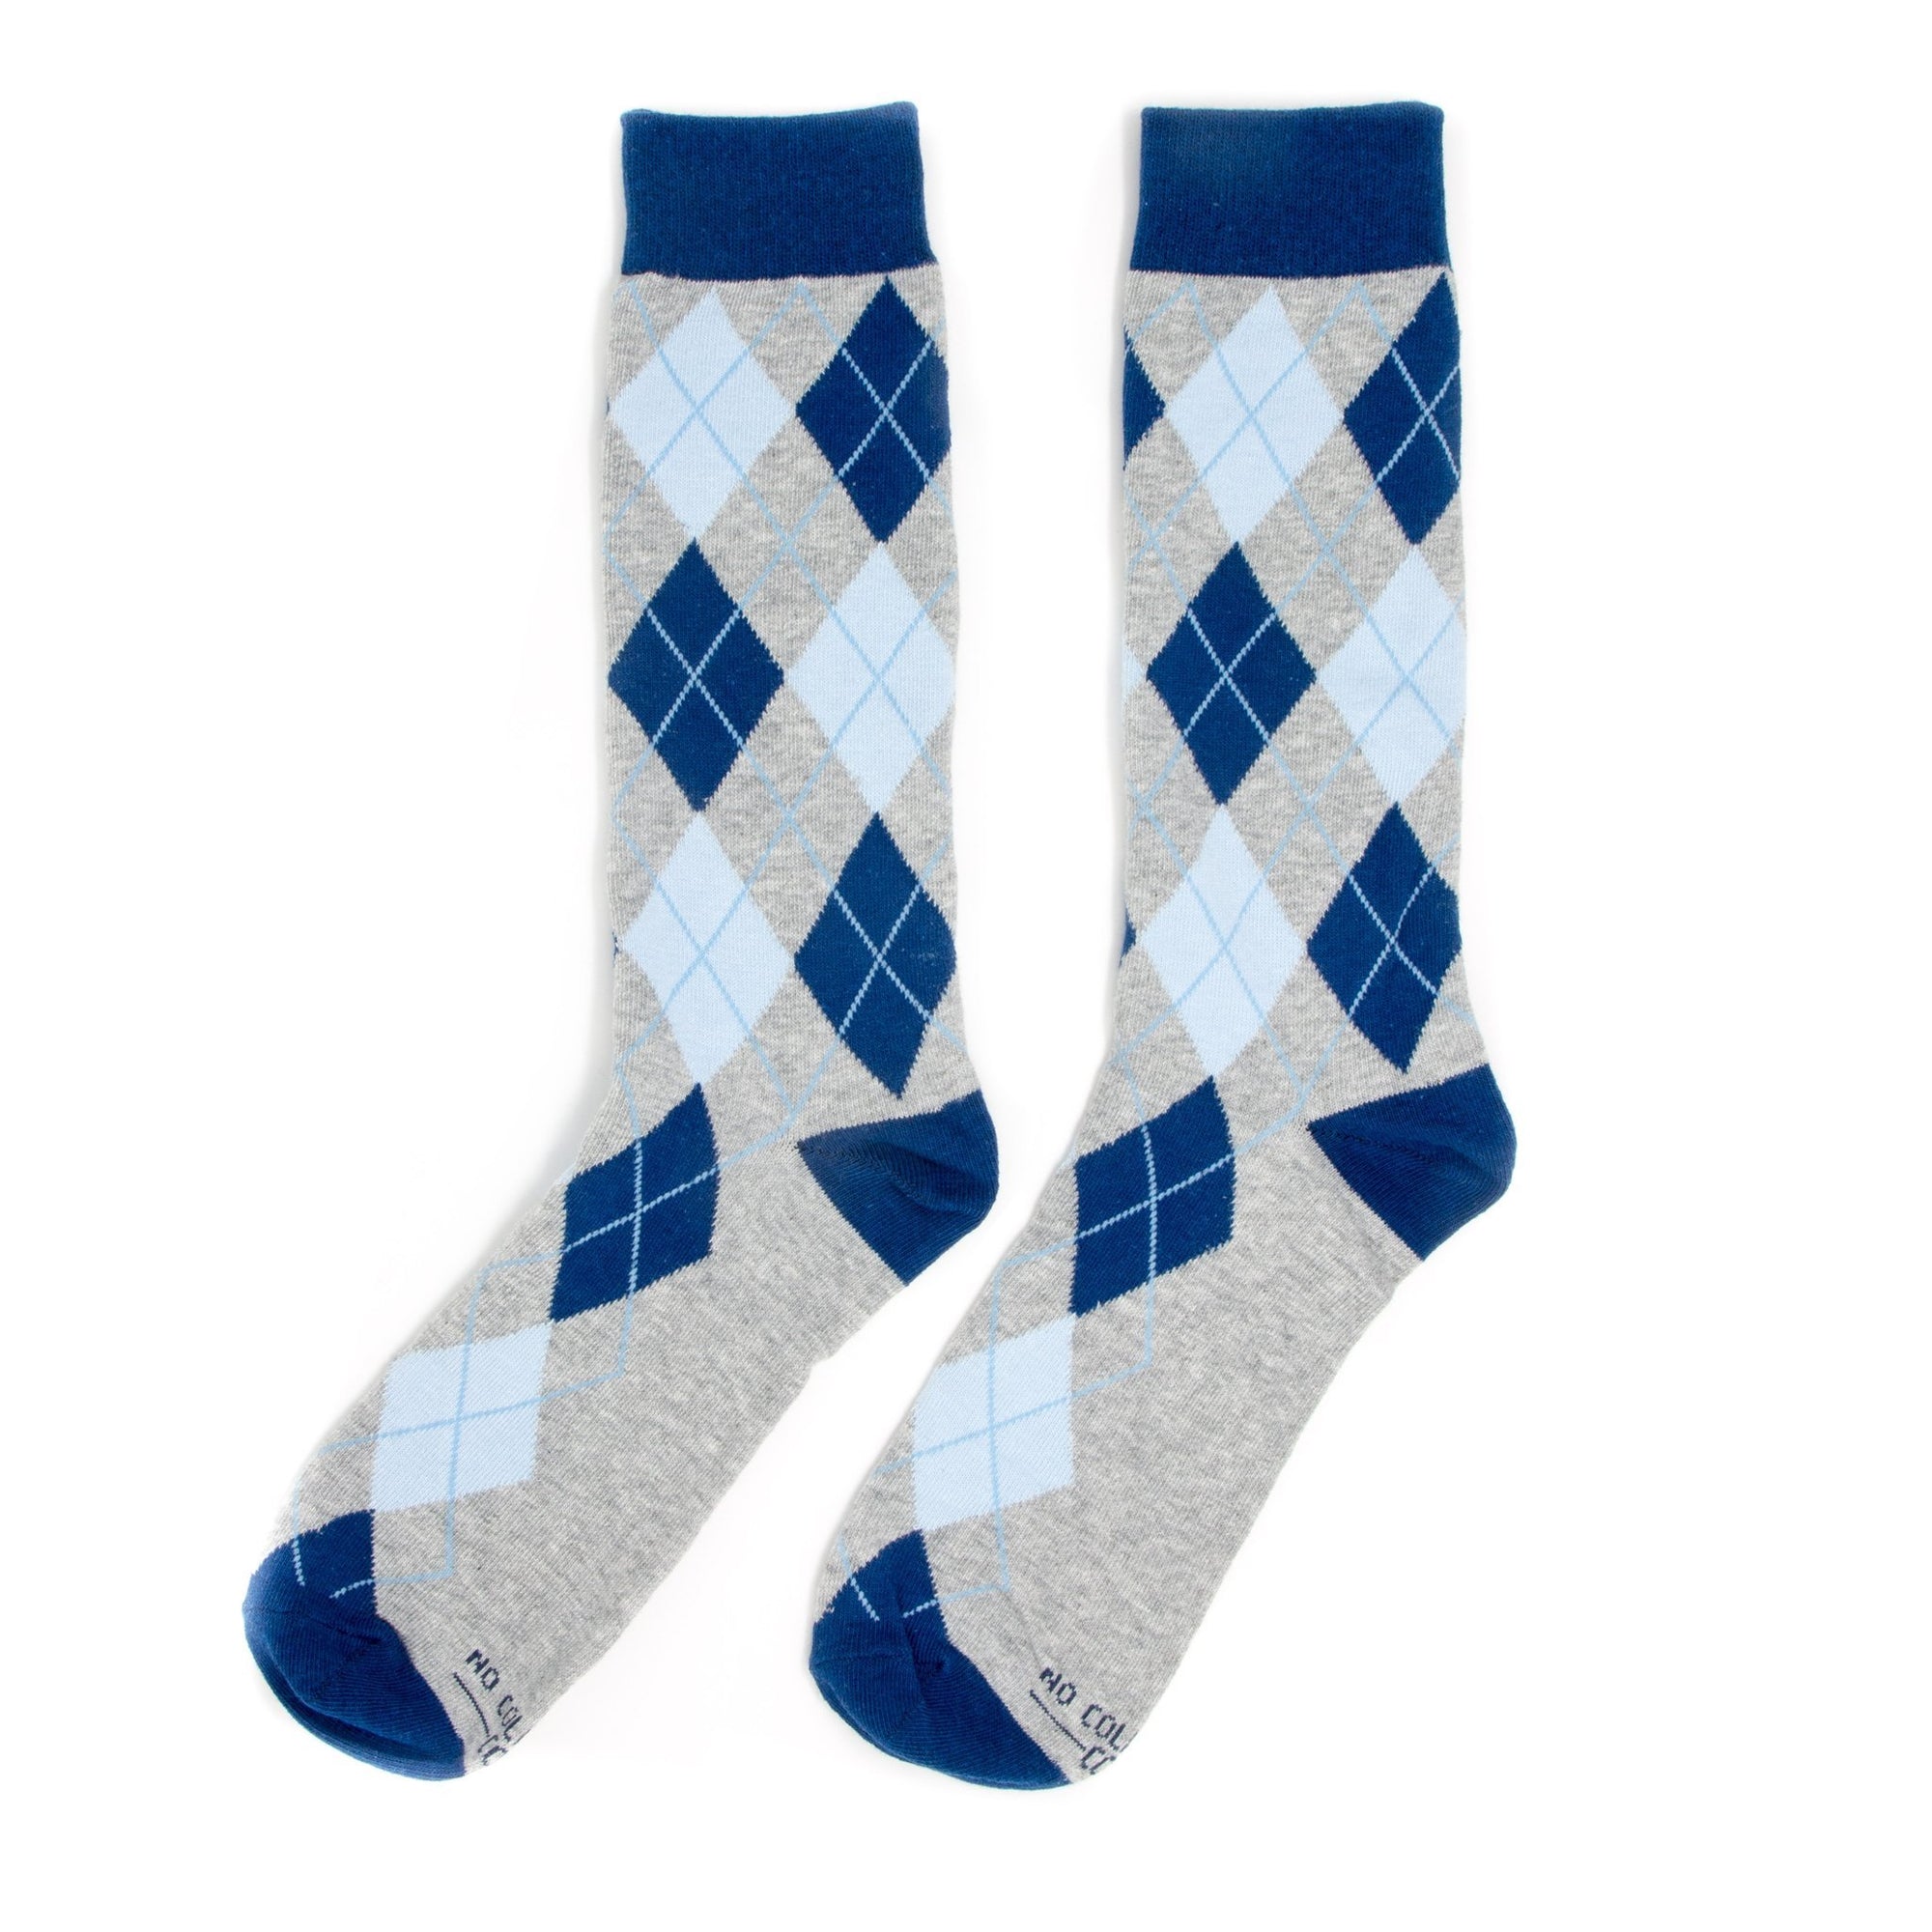 Personalized Name/Role/Date Groomsmen Socks Blue & Grey Argyle